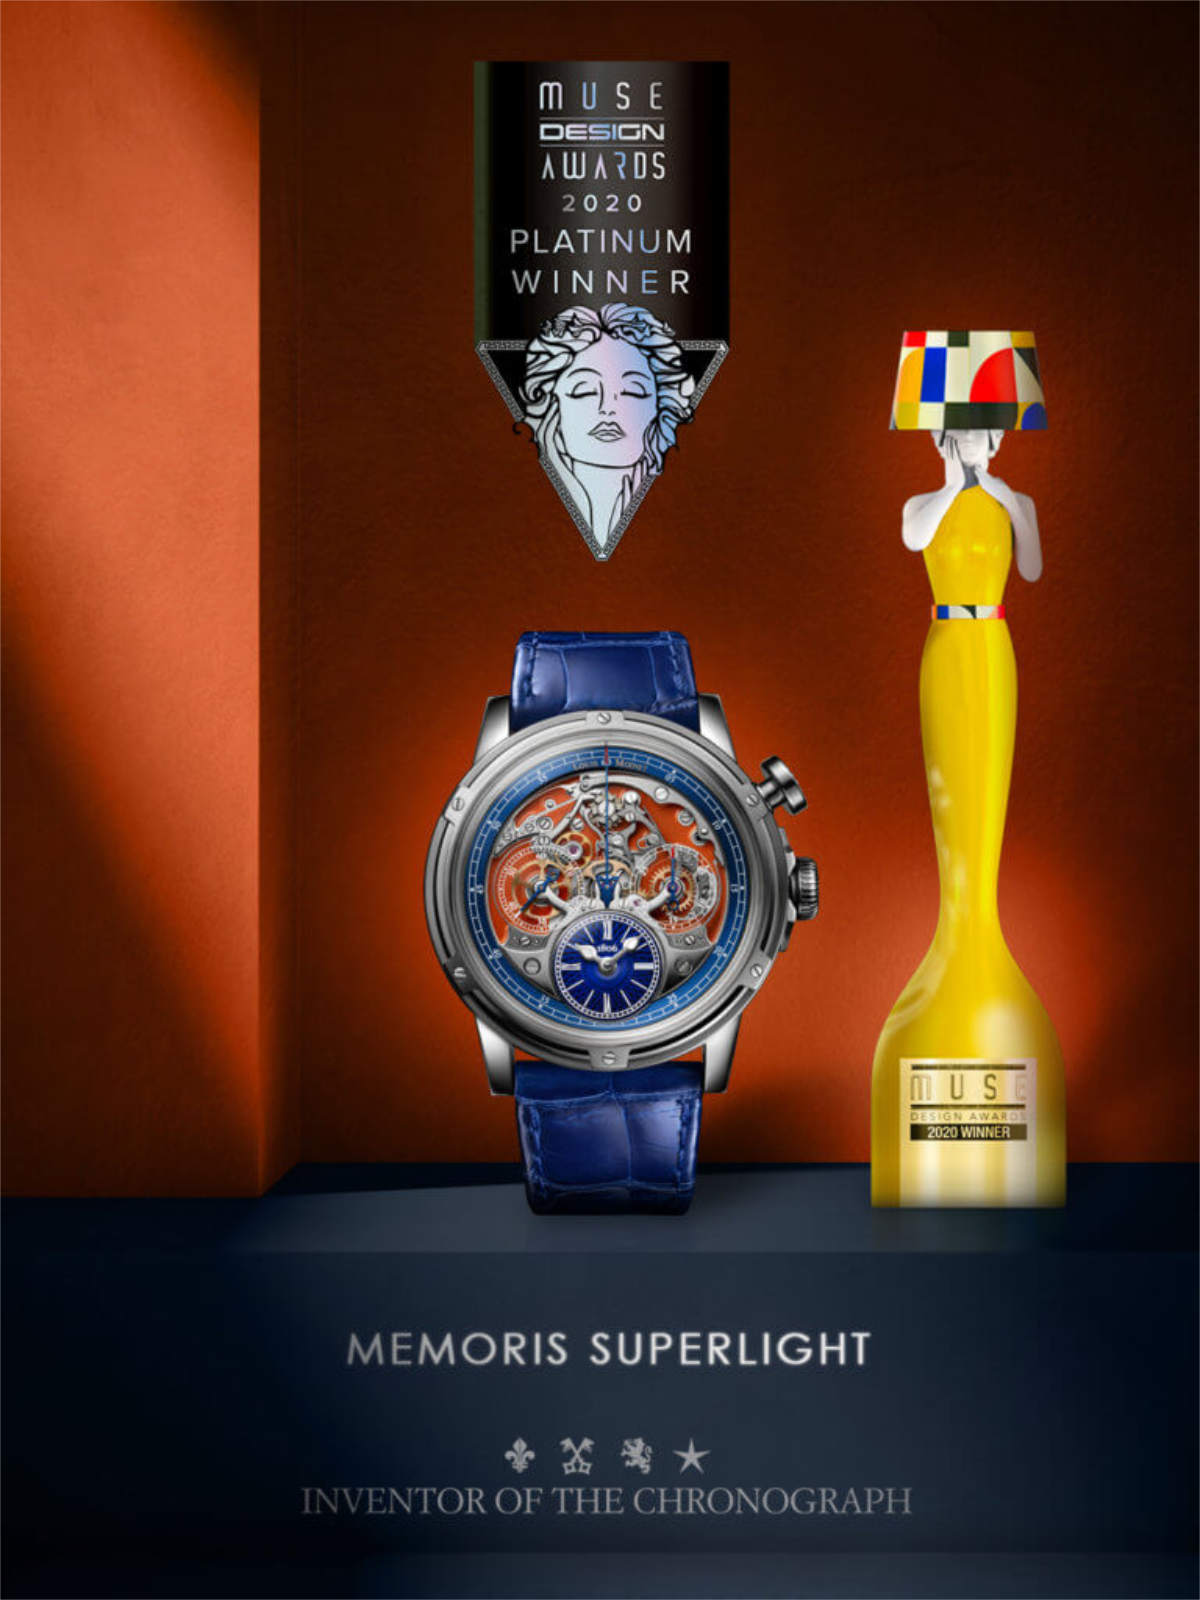 Louis Moinet Received A New Design Award For Memoris Superlight